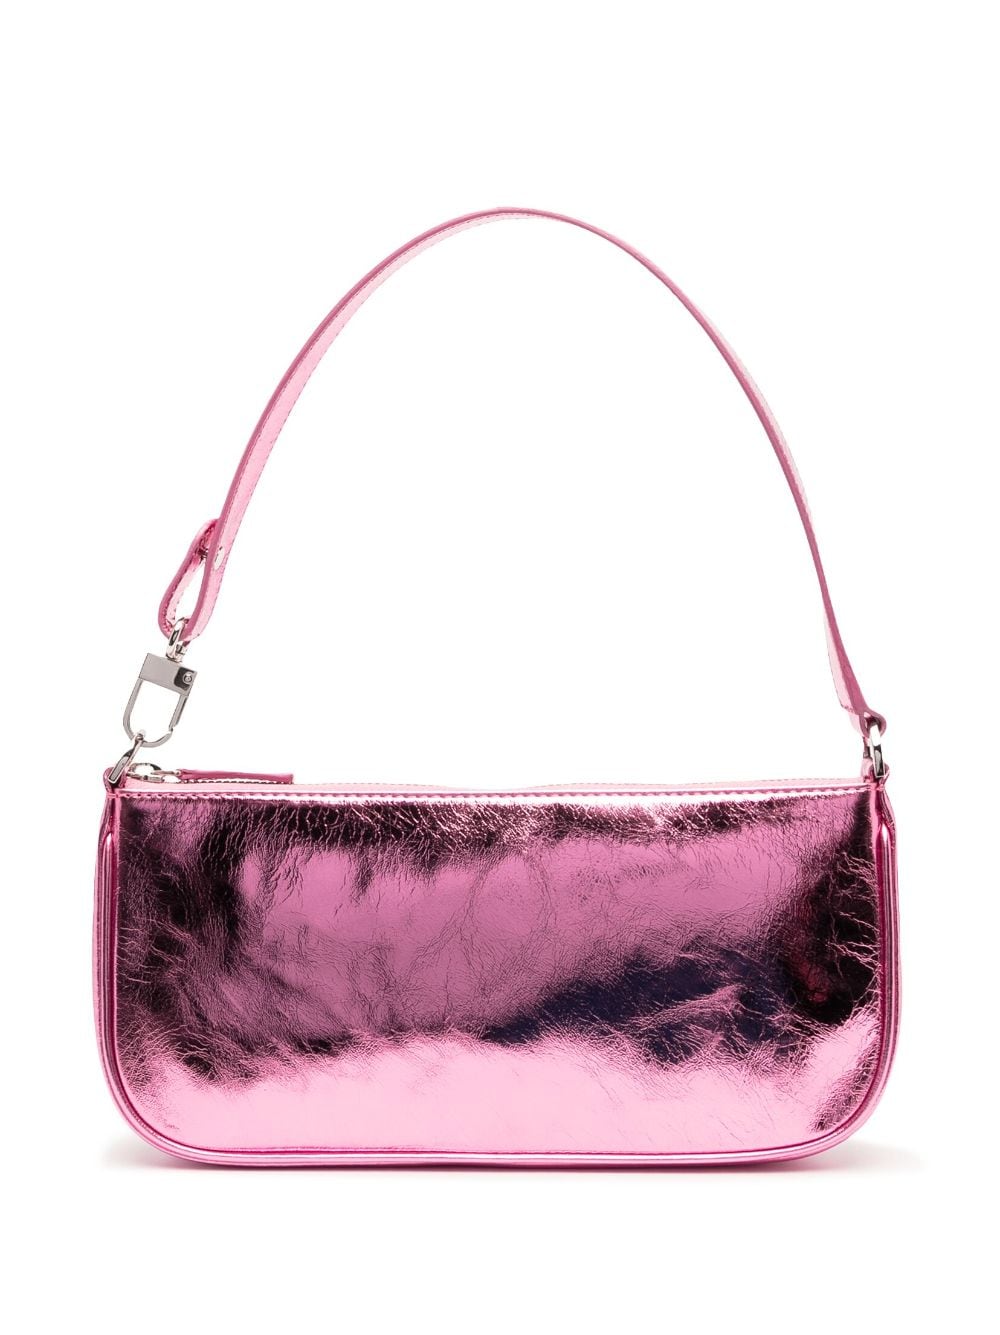 BY FAR Rachel leather shoulder bag - Pink von BY FAR